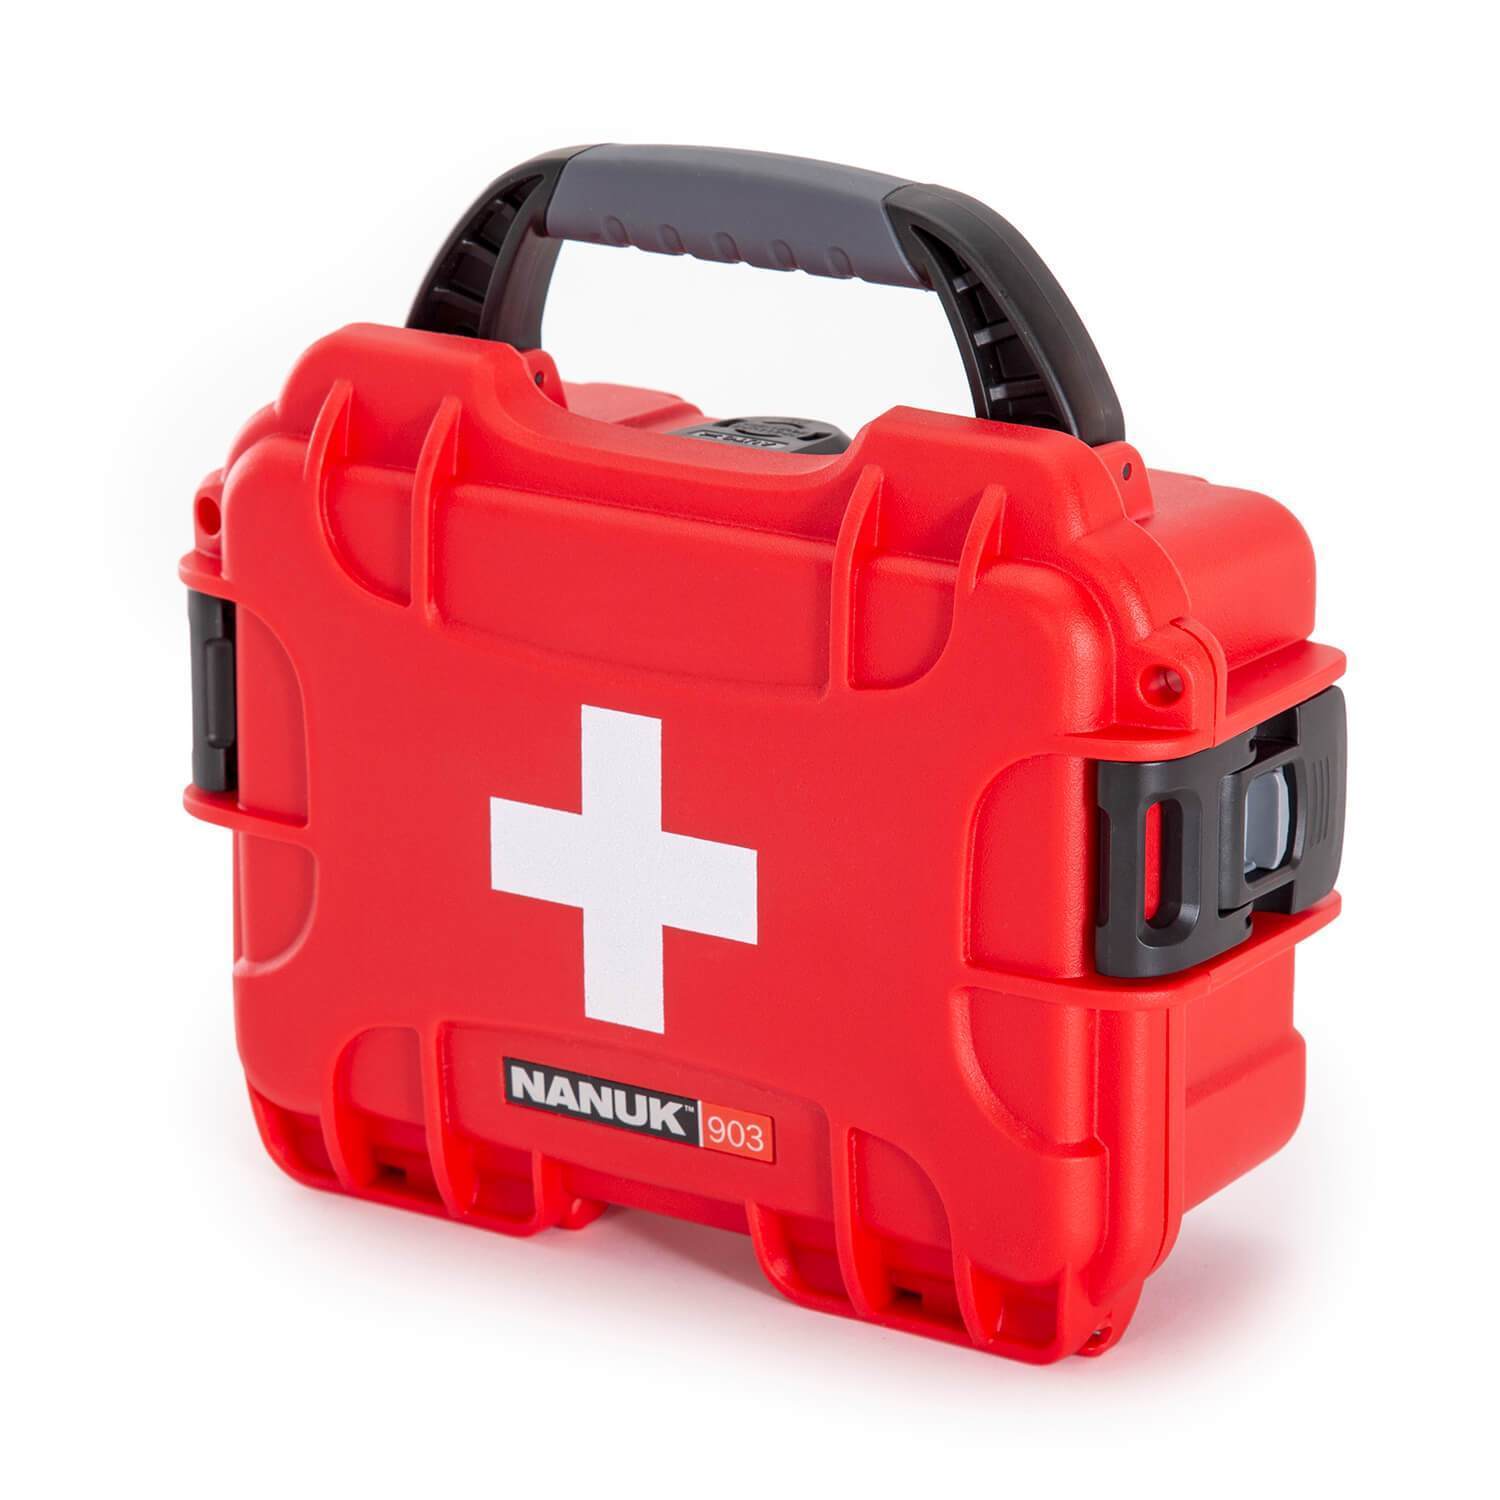 NANUK 903 First Aid case-Outdoor Case-Red-NANUK